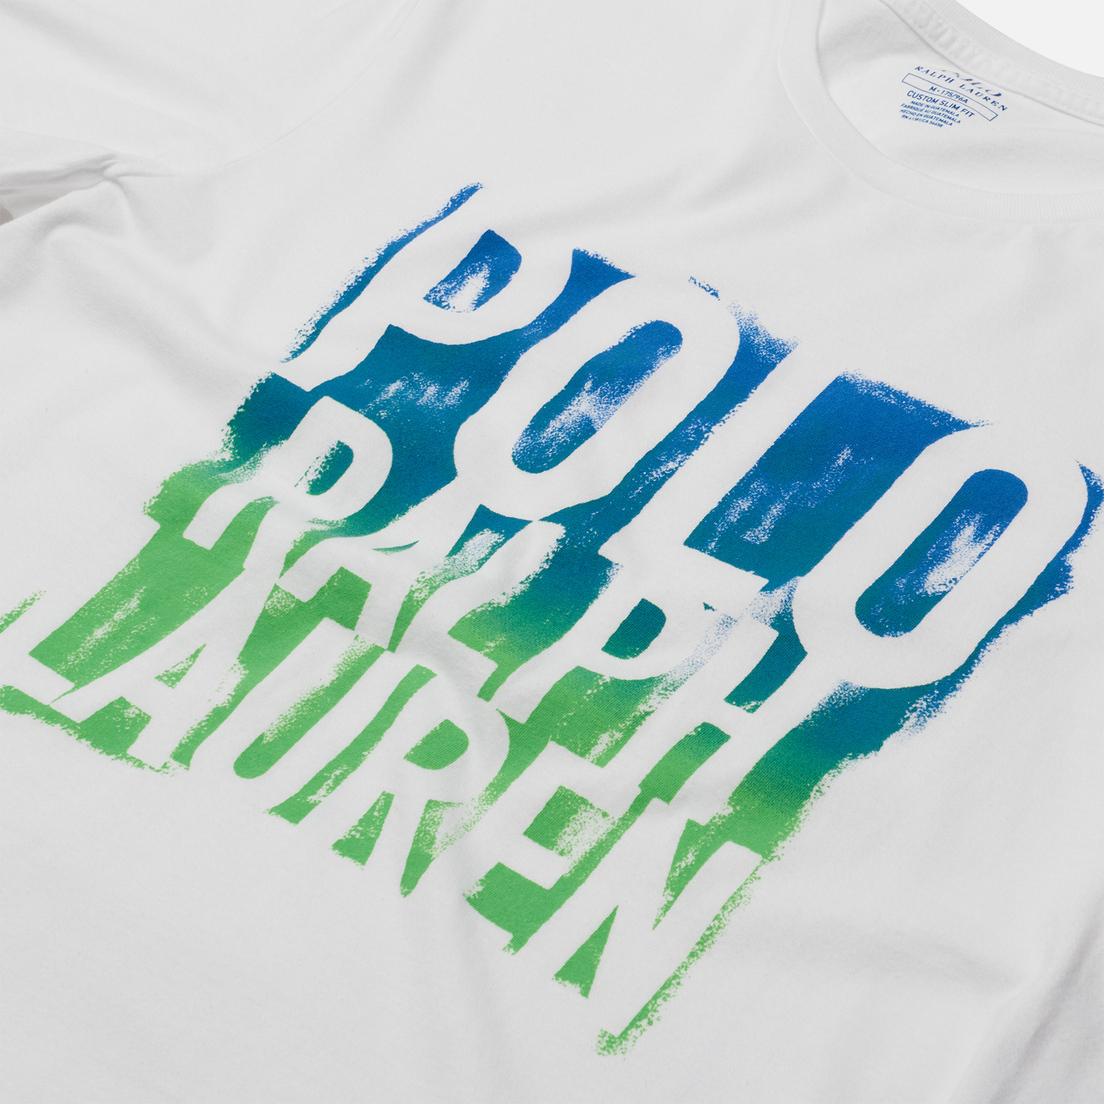 Polo Ralph Lauren Мужская футболка Classic Fit Graphic Logo